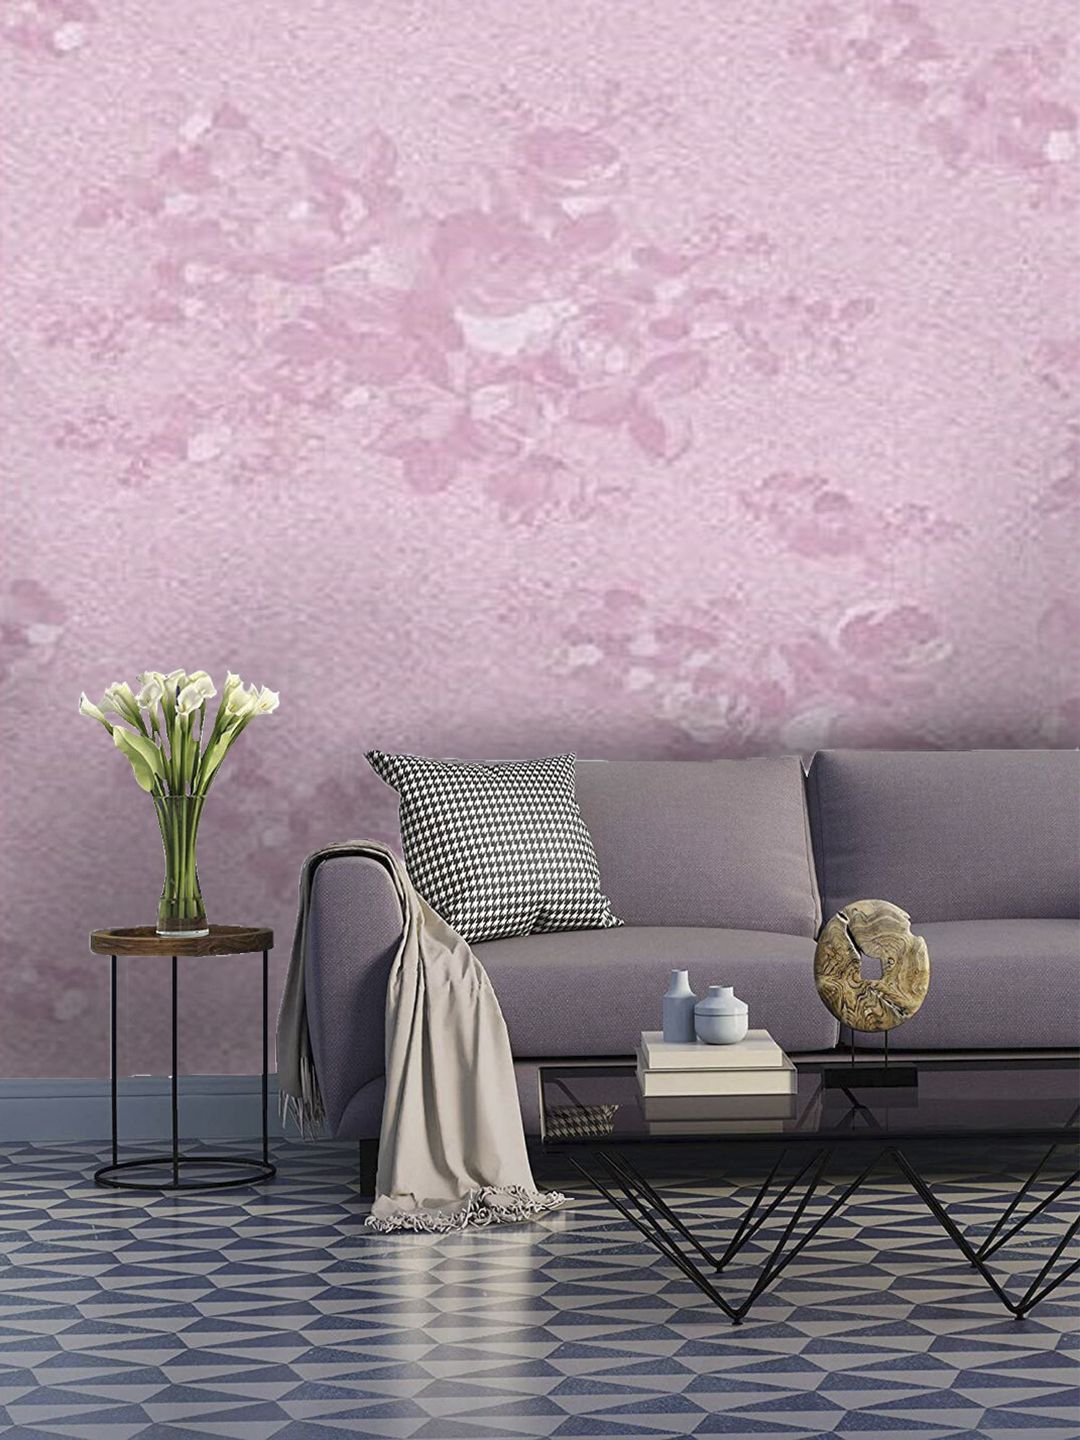 Jaamso Royals Pink Self-adhesive & Waterproof Floral Wallpaper Price in India